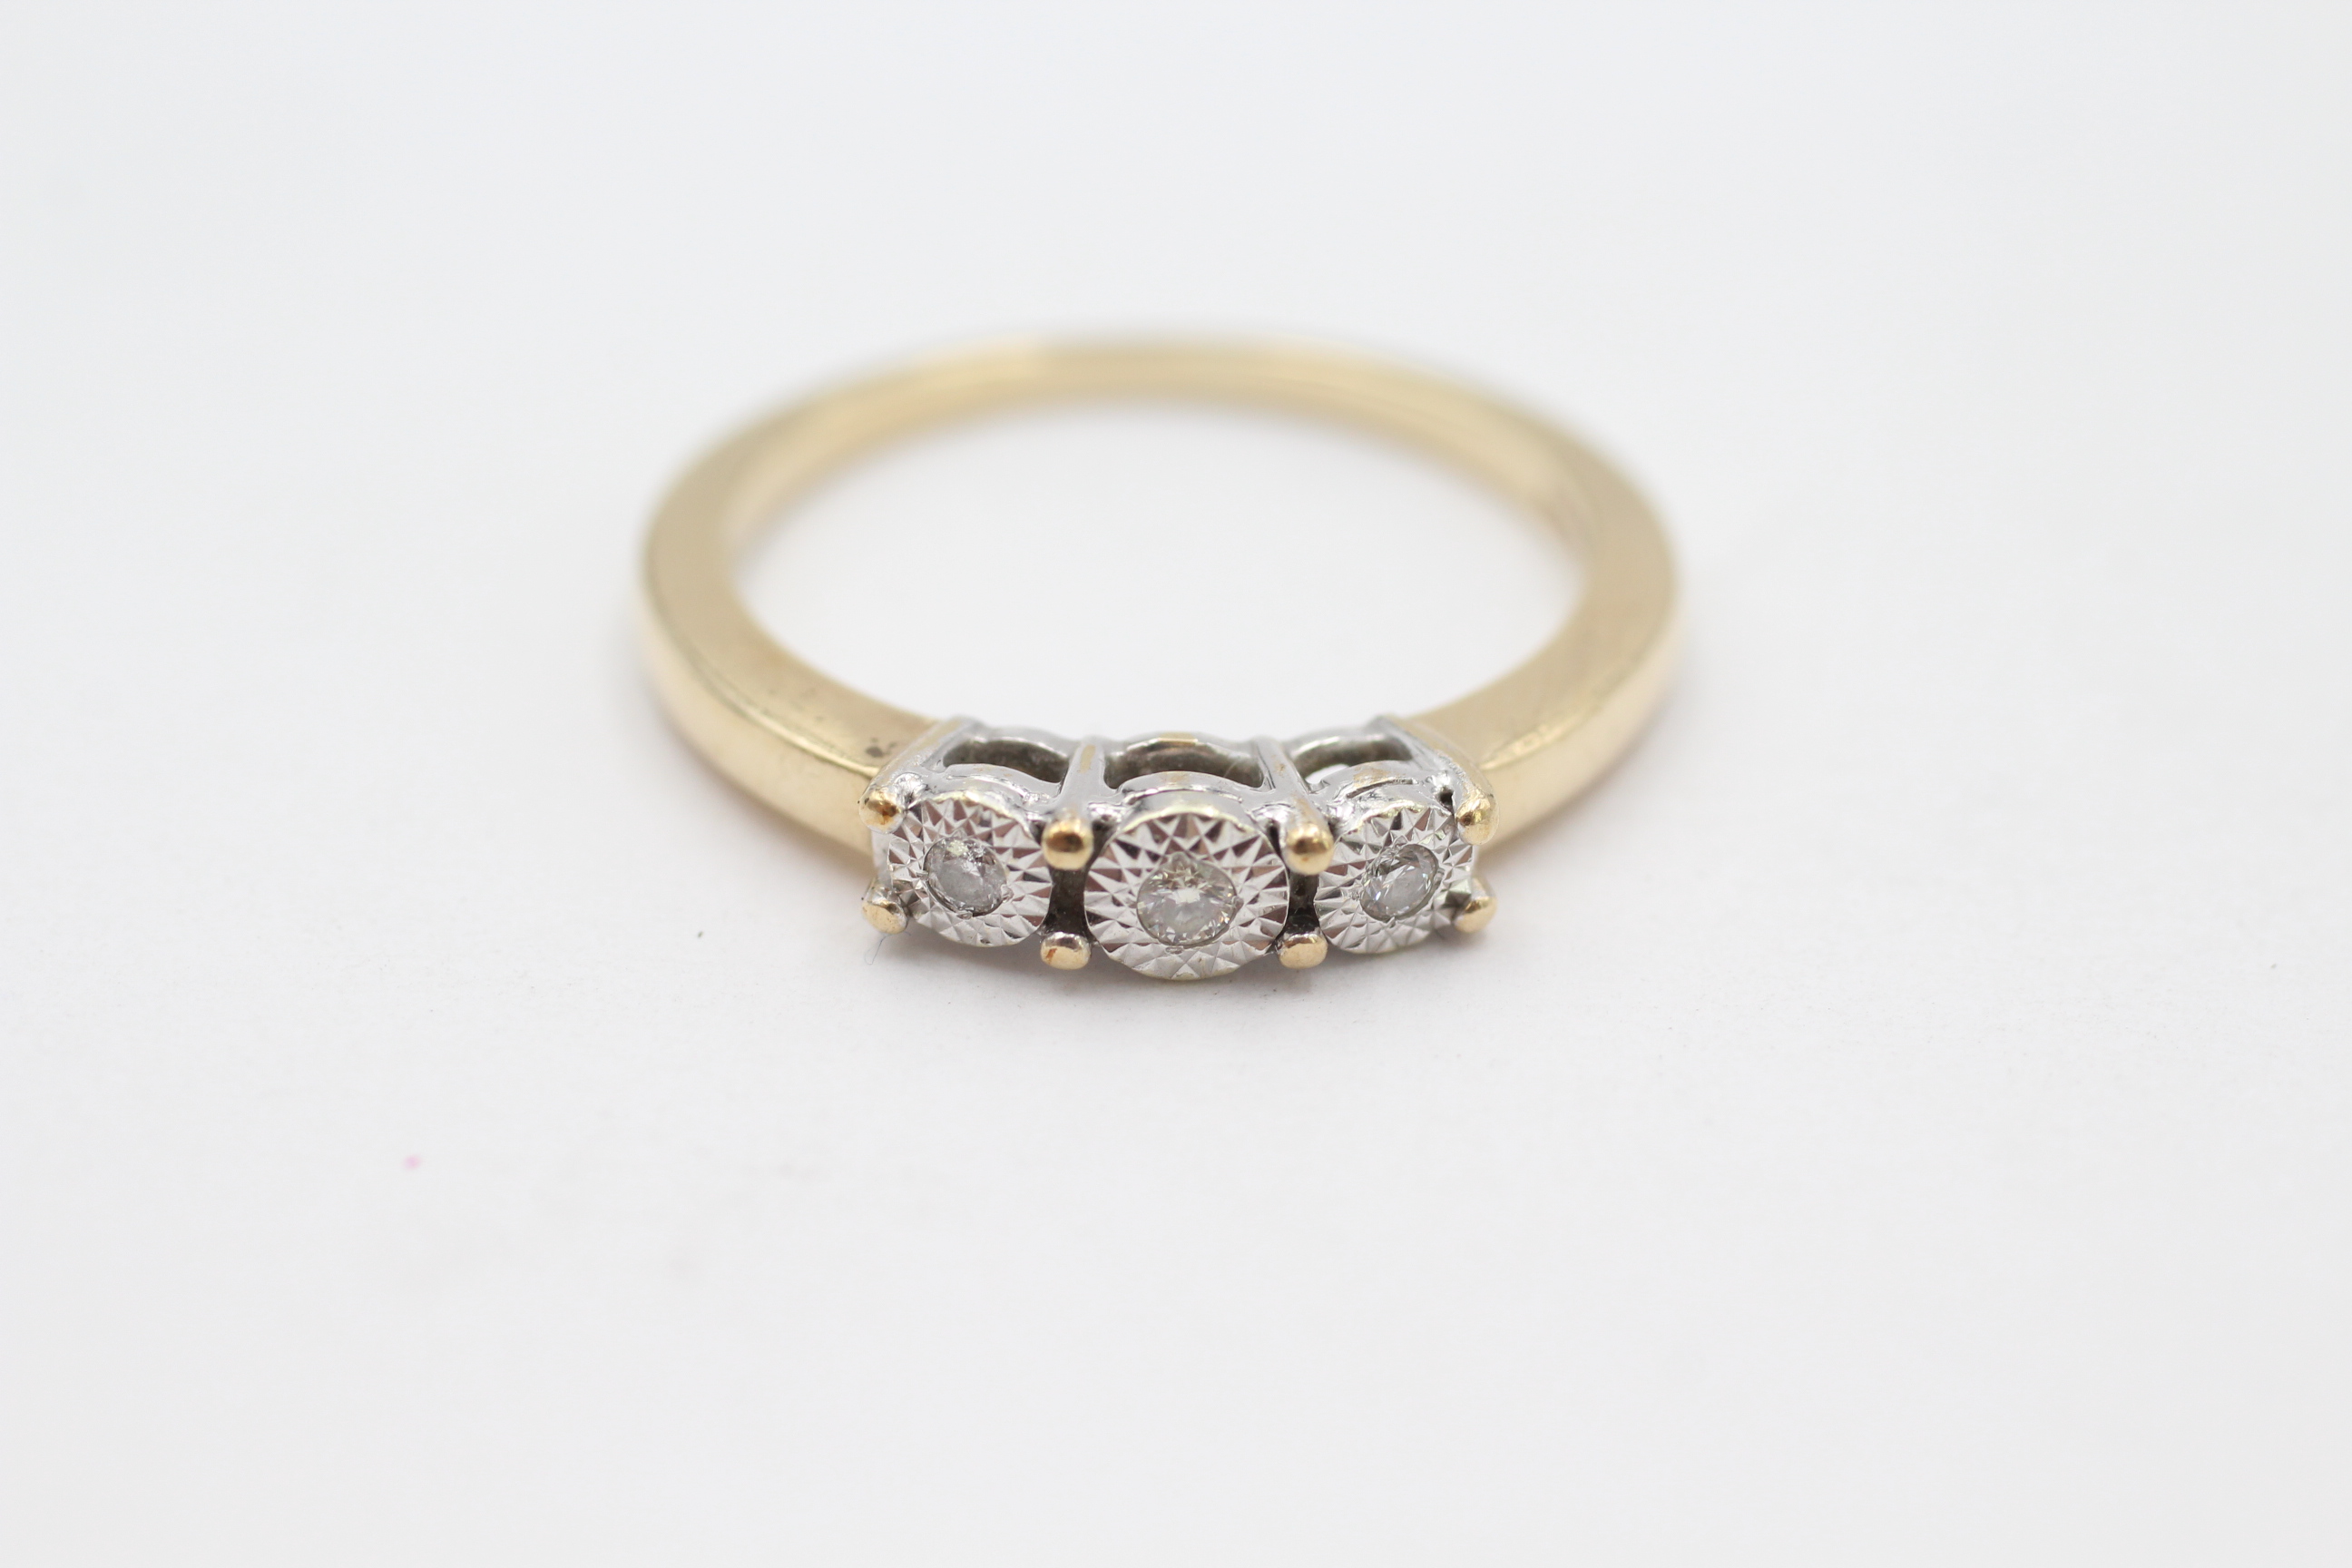 9ct gold diamond trilogy ring Size P - 2.8 g